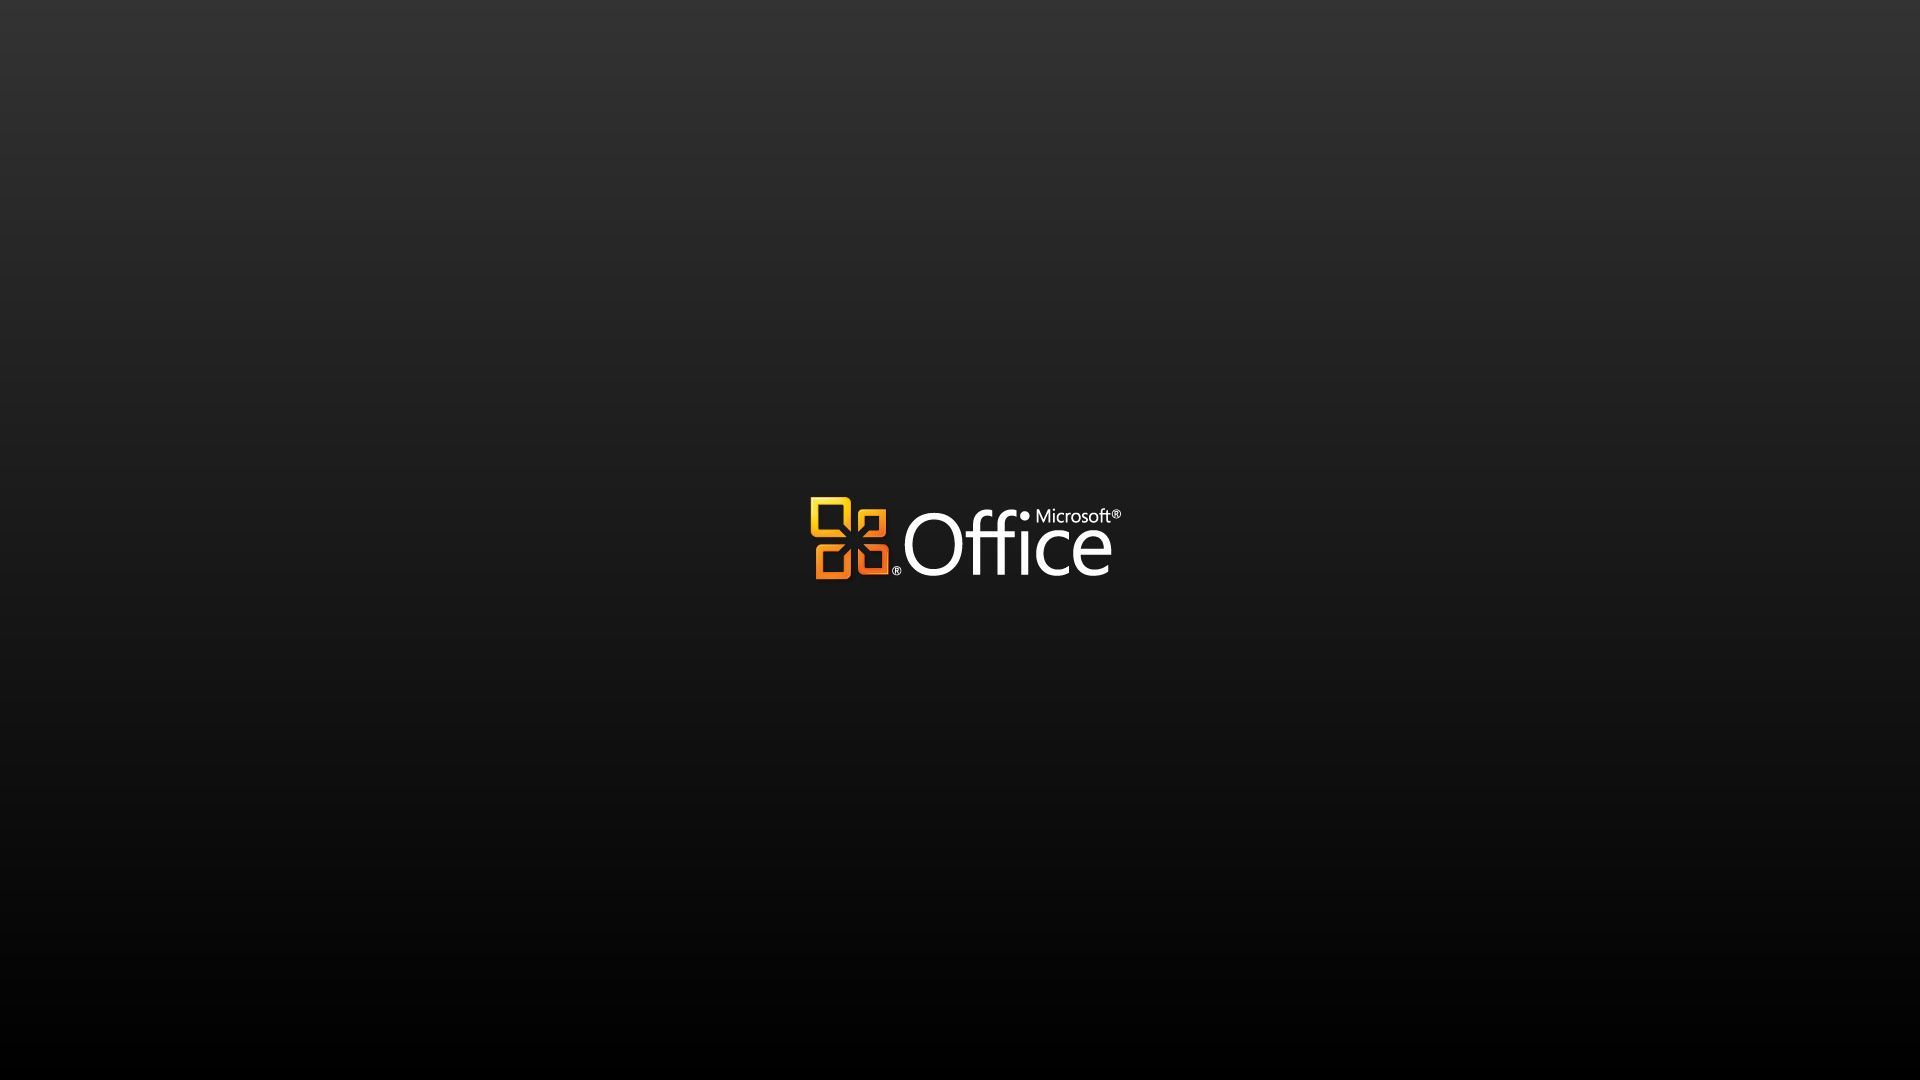 Microsoft Office Wallpaper. Microsoft office, Office wallpaper, Company logo